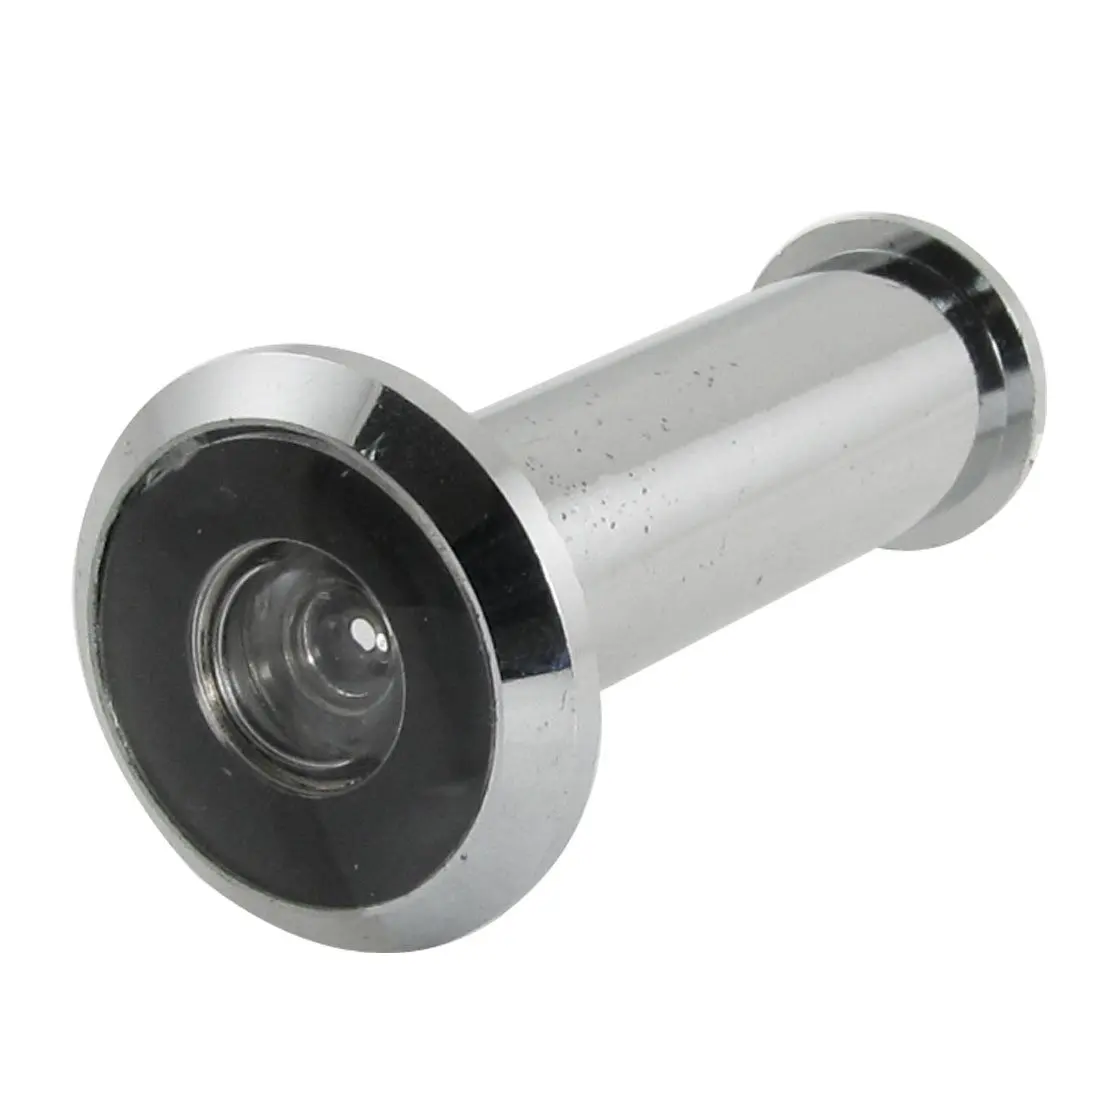 Christmas Home Security 200 Degree 50 75mm Door Scope peephole Viewer Peep Sight Hole